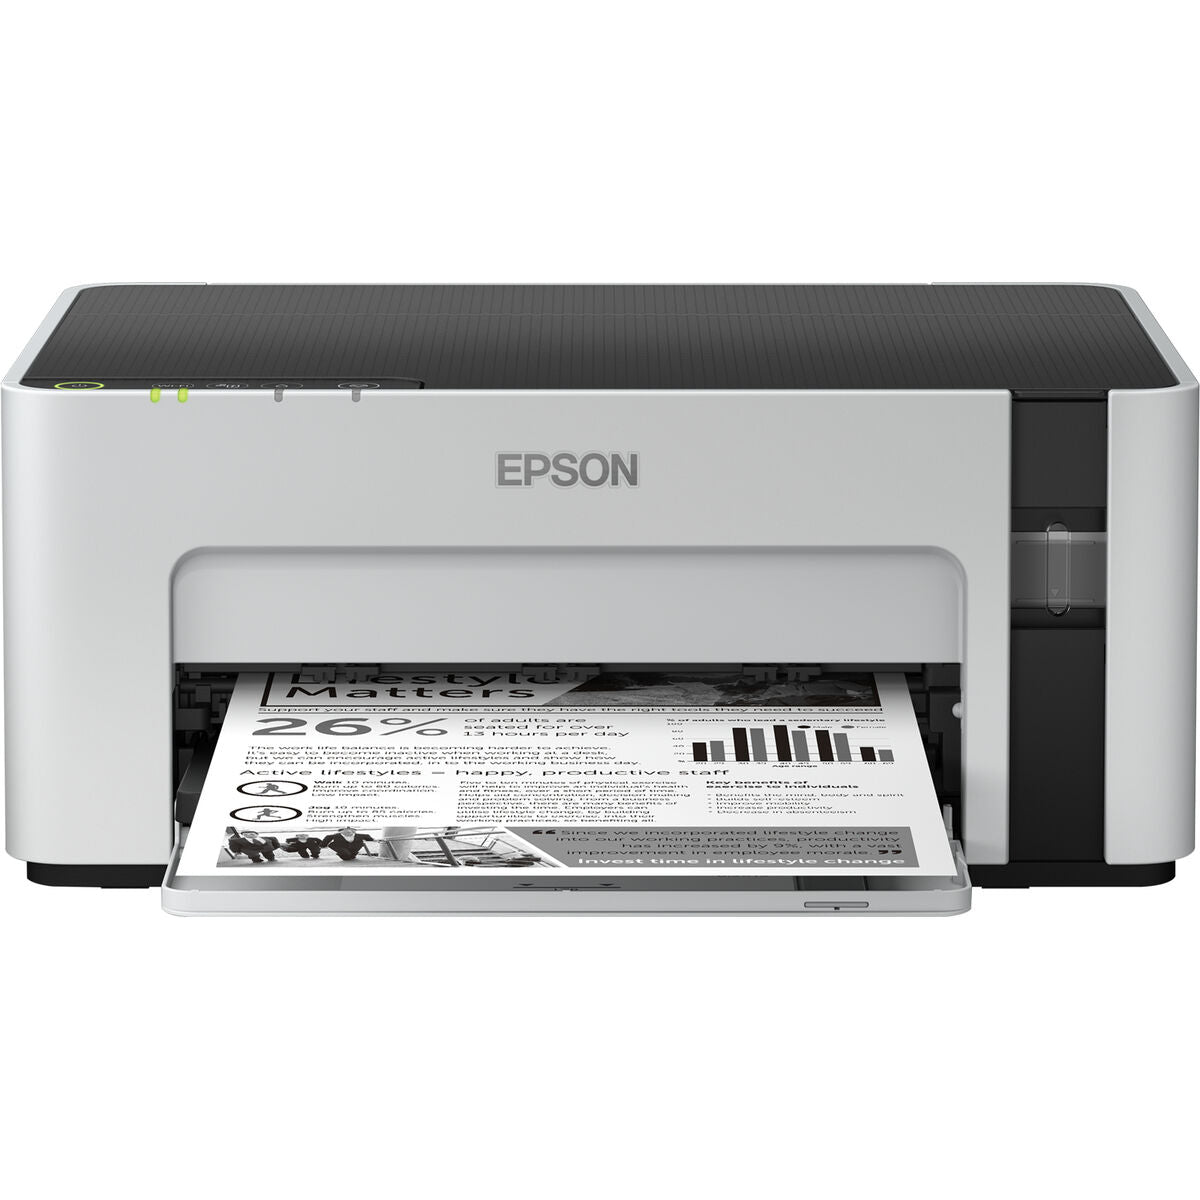 Printer Epson C11CG96402 32 ppm WIFI, Epson, Computing, Printers and accessories, printer-epson-c11cg96402-32-ppm-wifi-1, Brand_Epson, category-reference-2609, category-reference-2642, category-reference-2645, category-reference-t-19685, category-reference-t-19911, category-reference-t-21378, category-reference-t-25695, Condition_NEW, office, Price_200 - 300, Teleworking, RiotNook